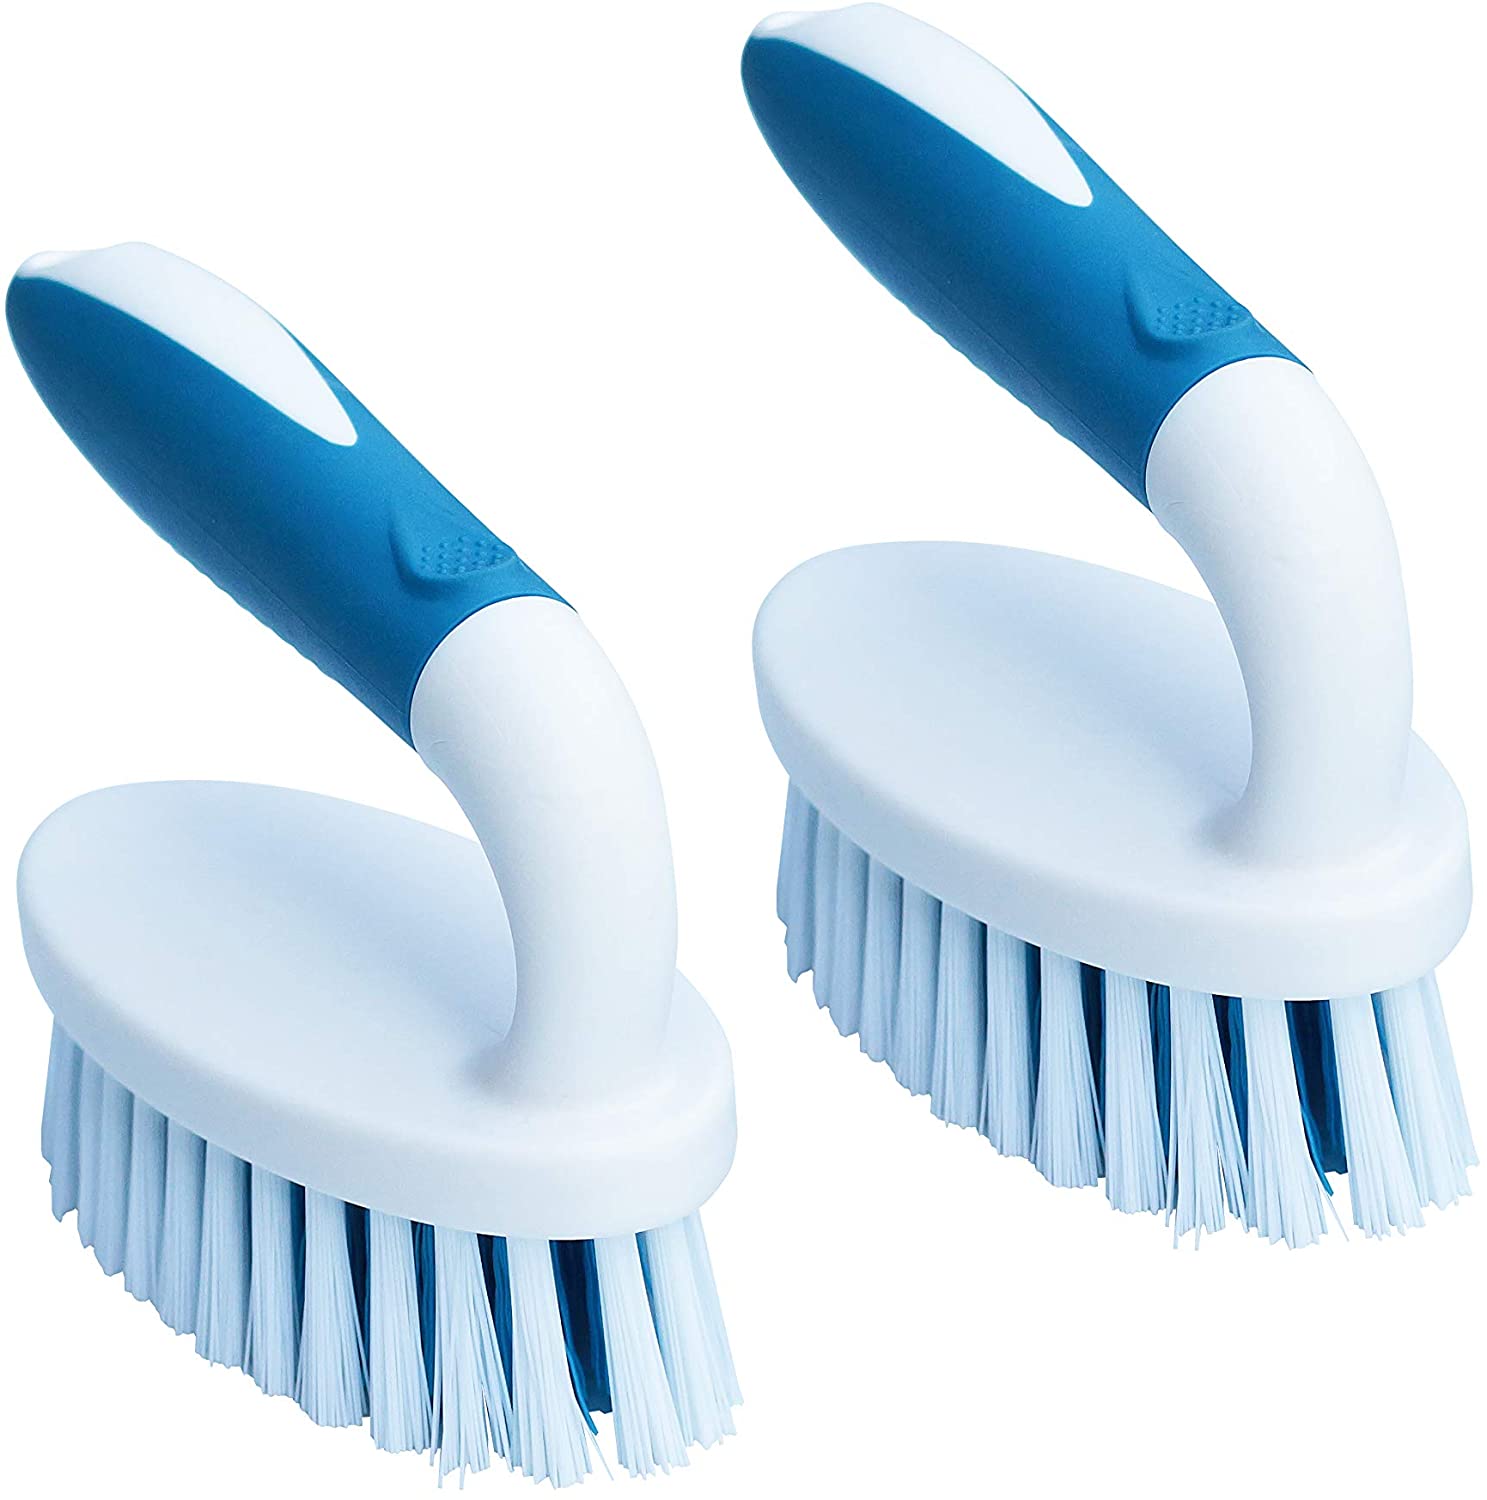 https://www.dontwasteyourmoney.com/wp-content/uploads/2022/02/phyex-raised-ergonomic-handle-cleaning-brushes-2-pack-cleaning-brush.jpg